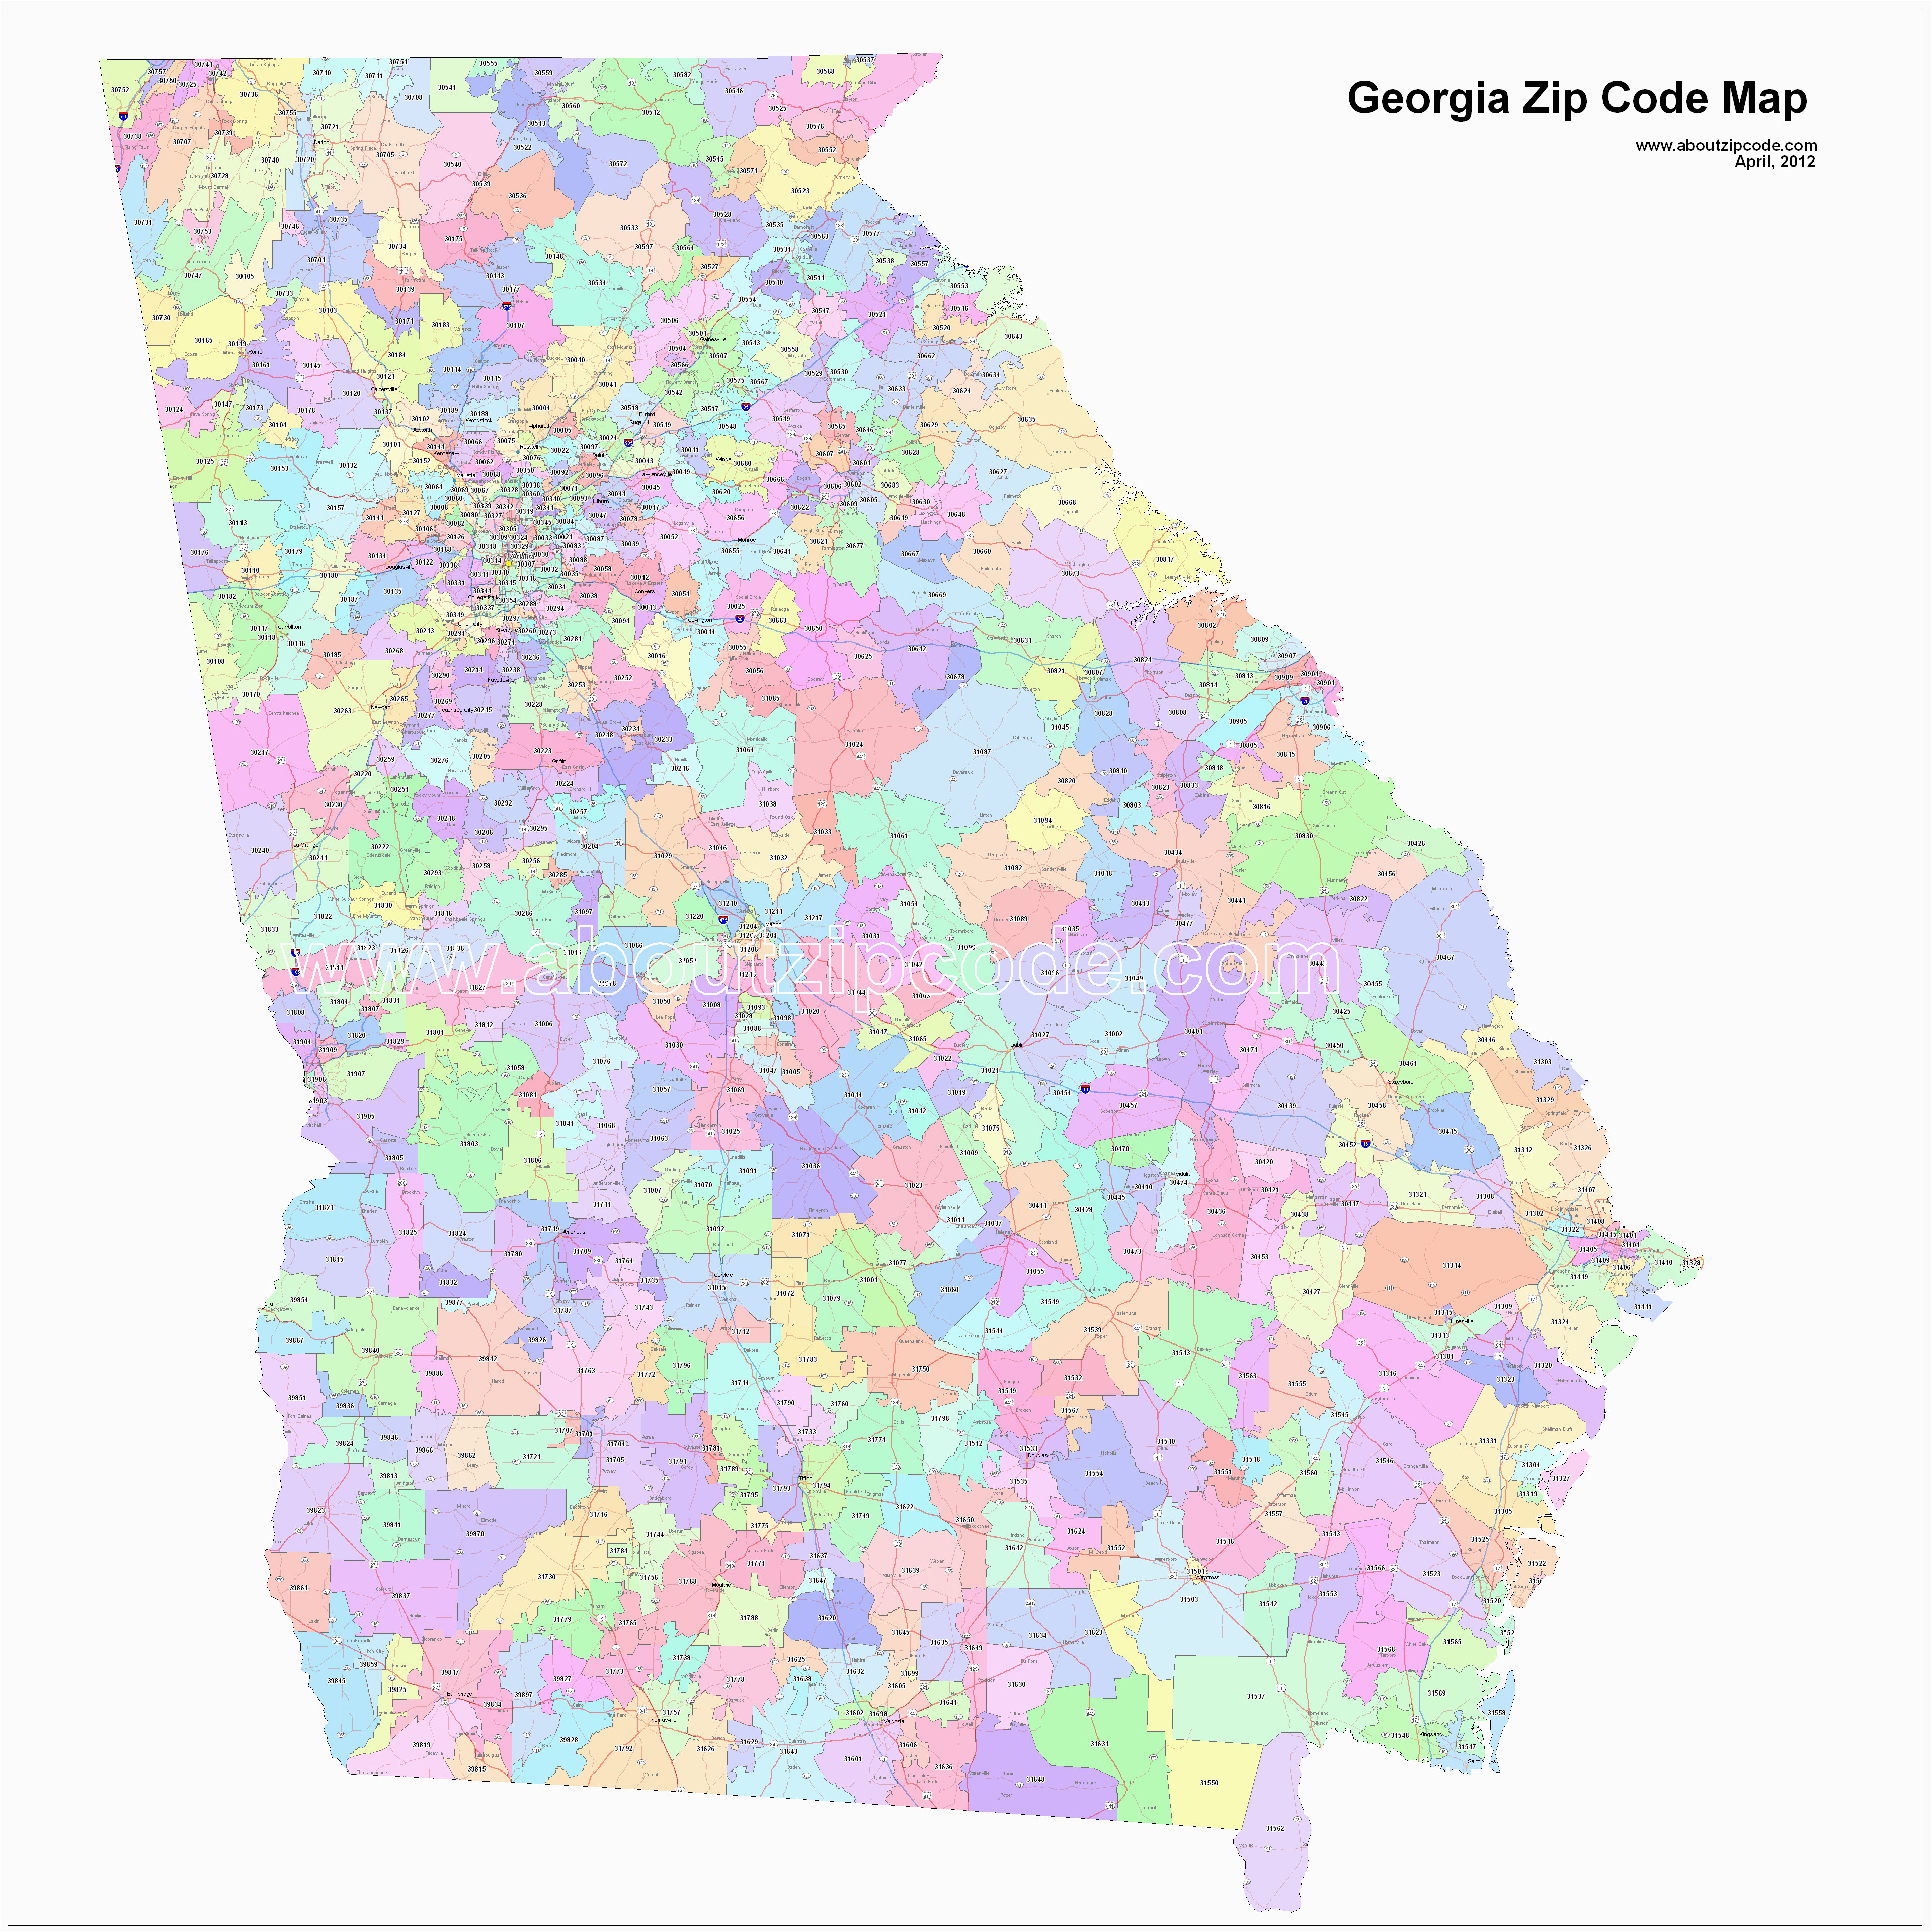 North Georgia Zip Code Map Georgia Zip Code Maps Free Georgia Zip Code Maps